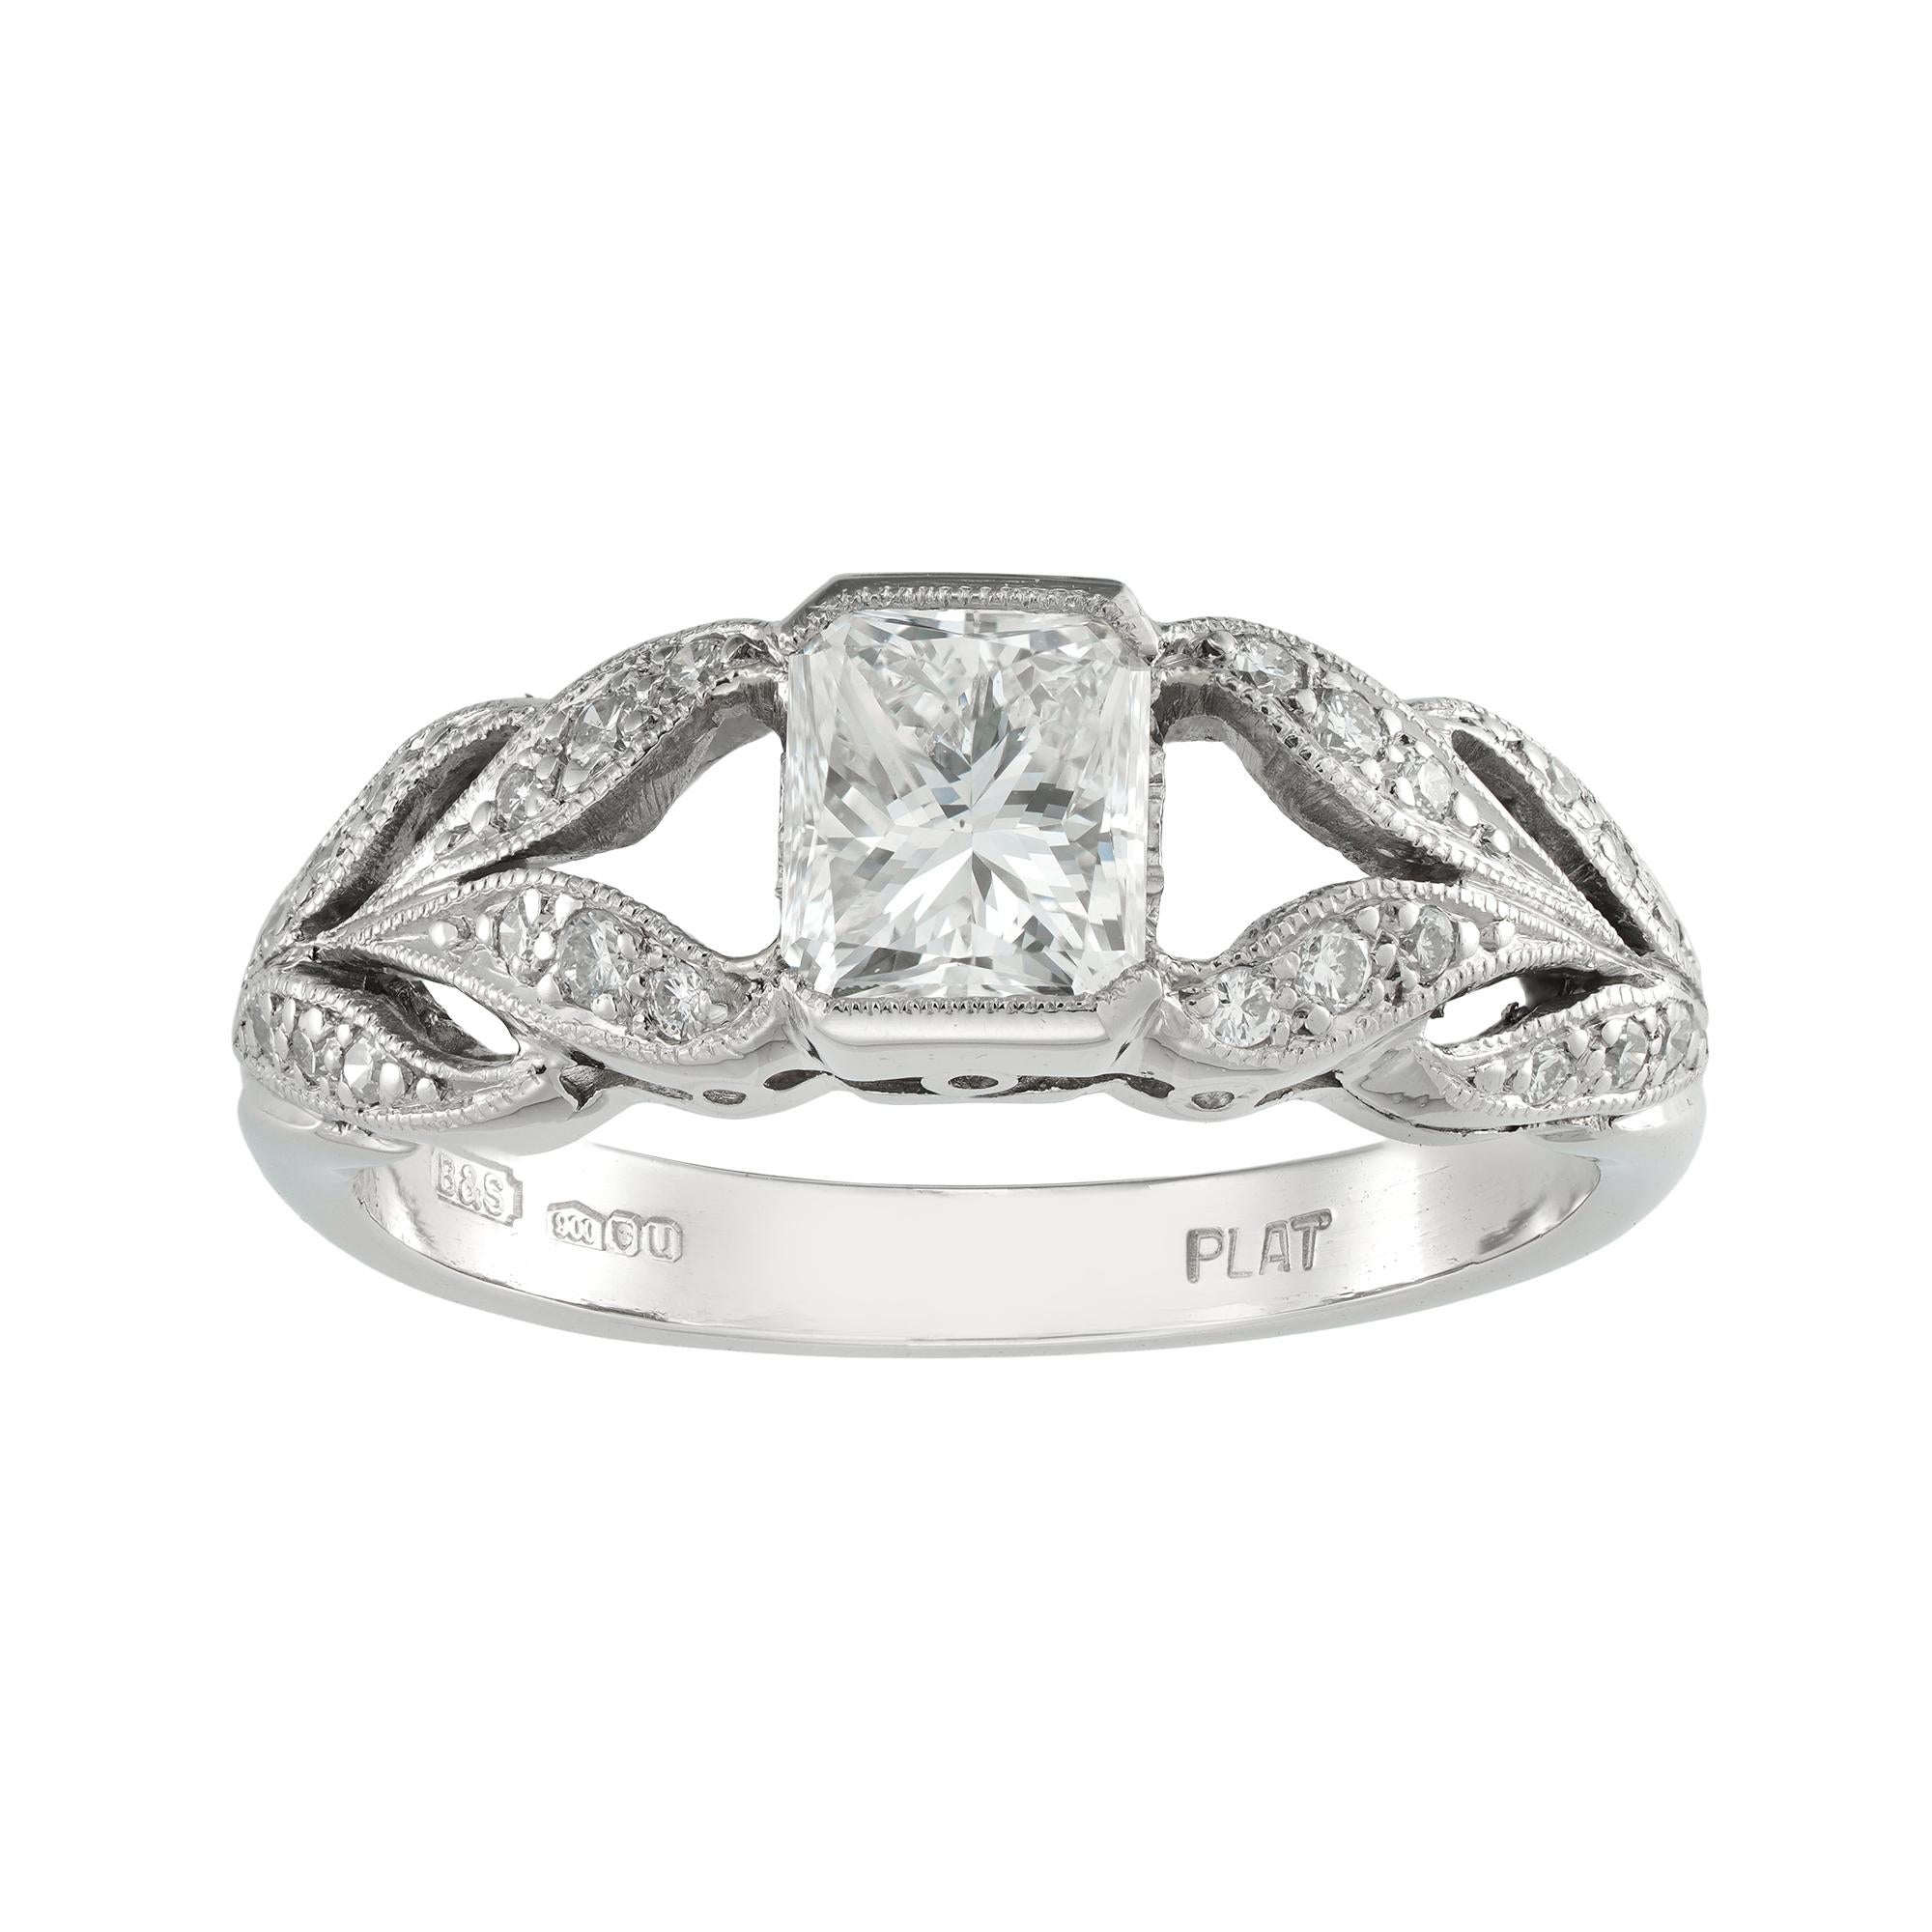 A Diamond Engagement Ring